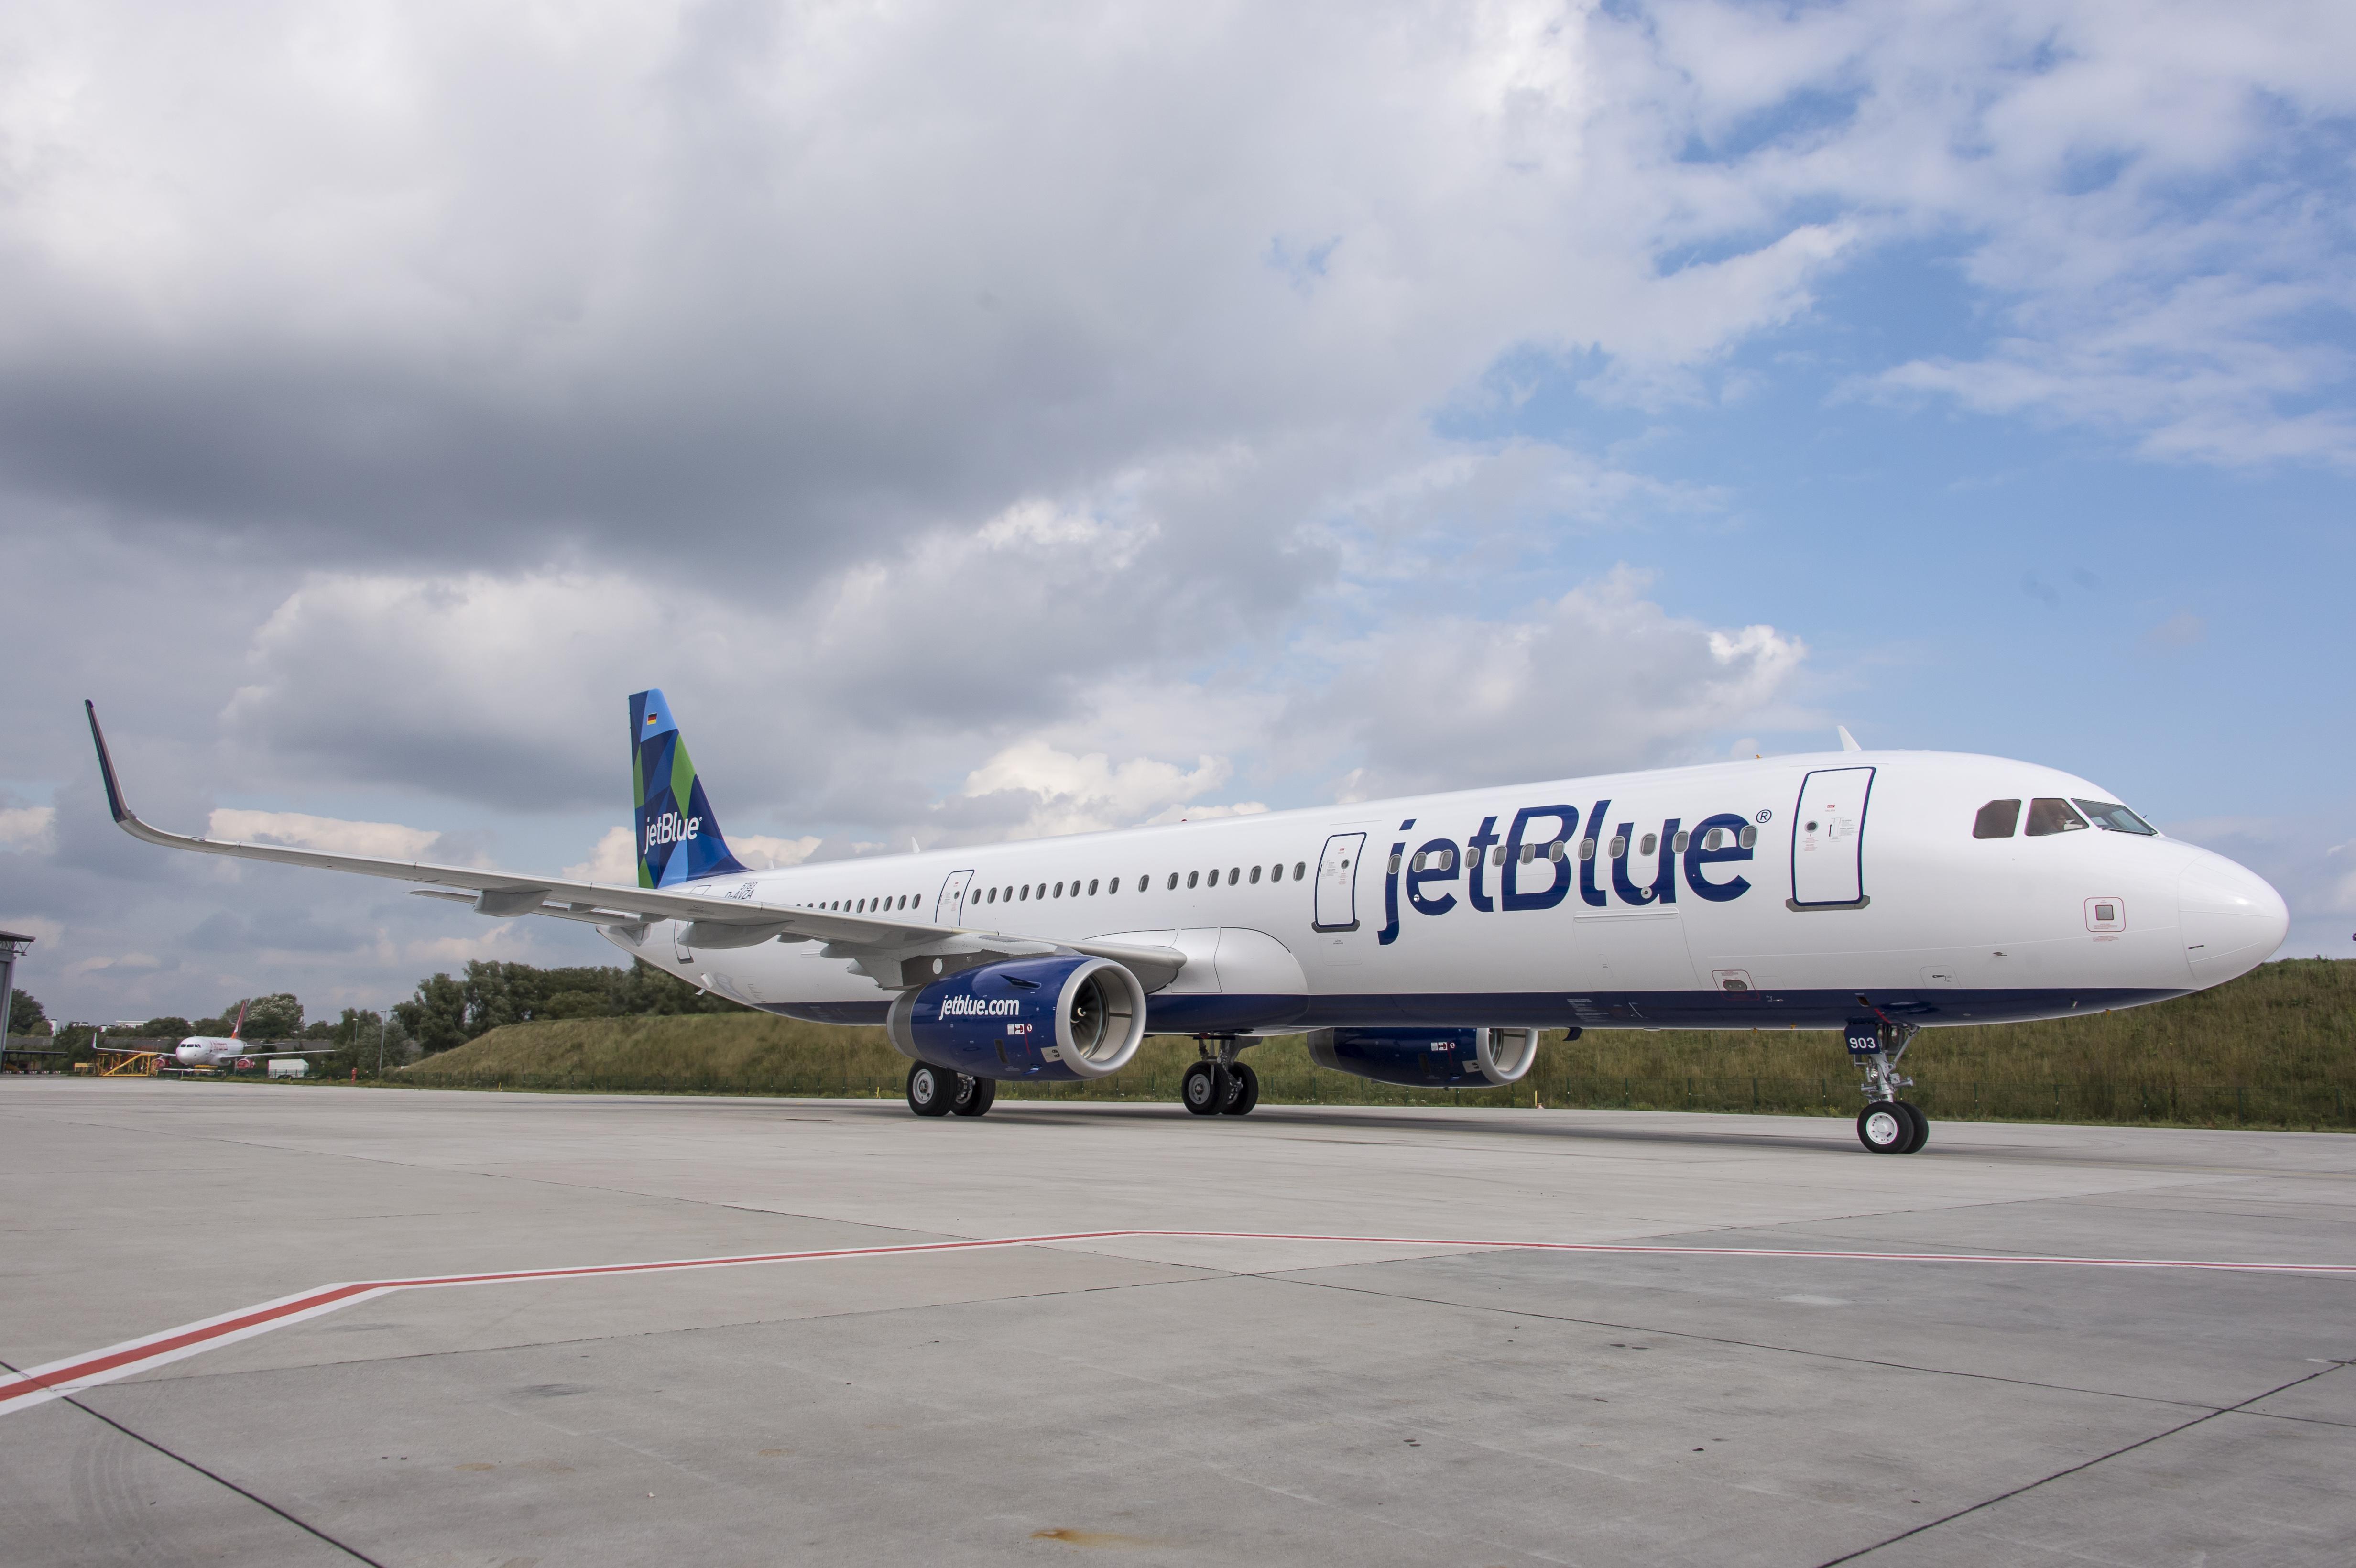 JetBlue to retrofit Airbus fleet with Vortex Generators